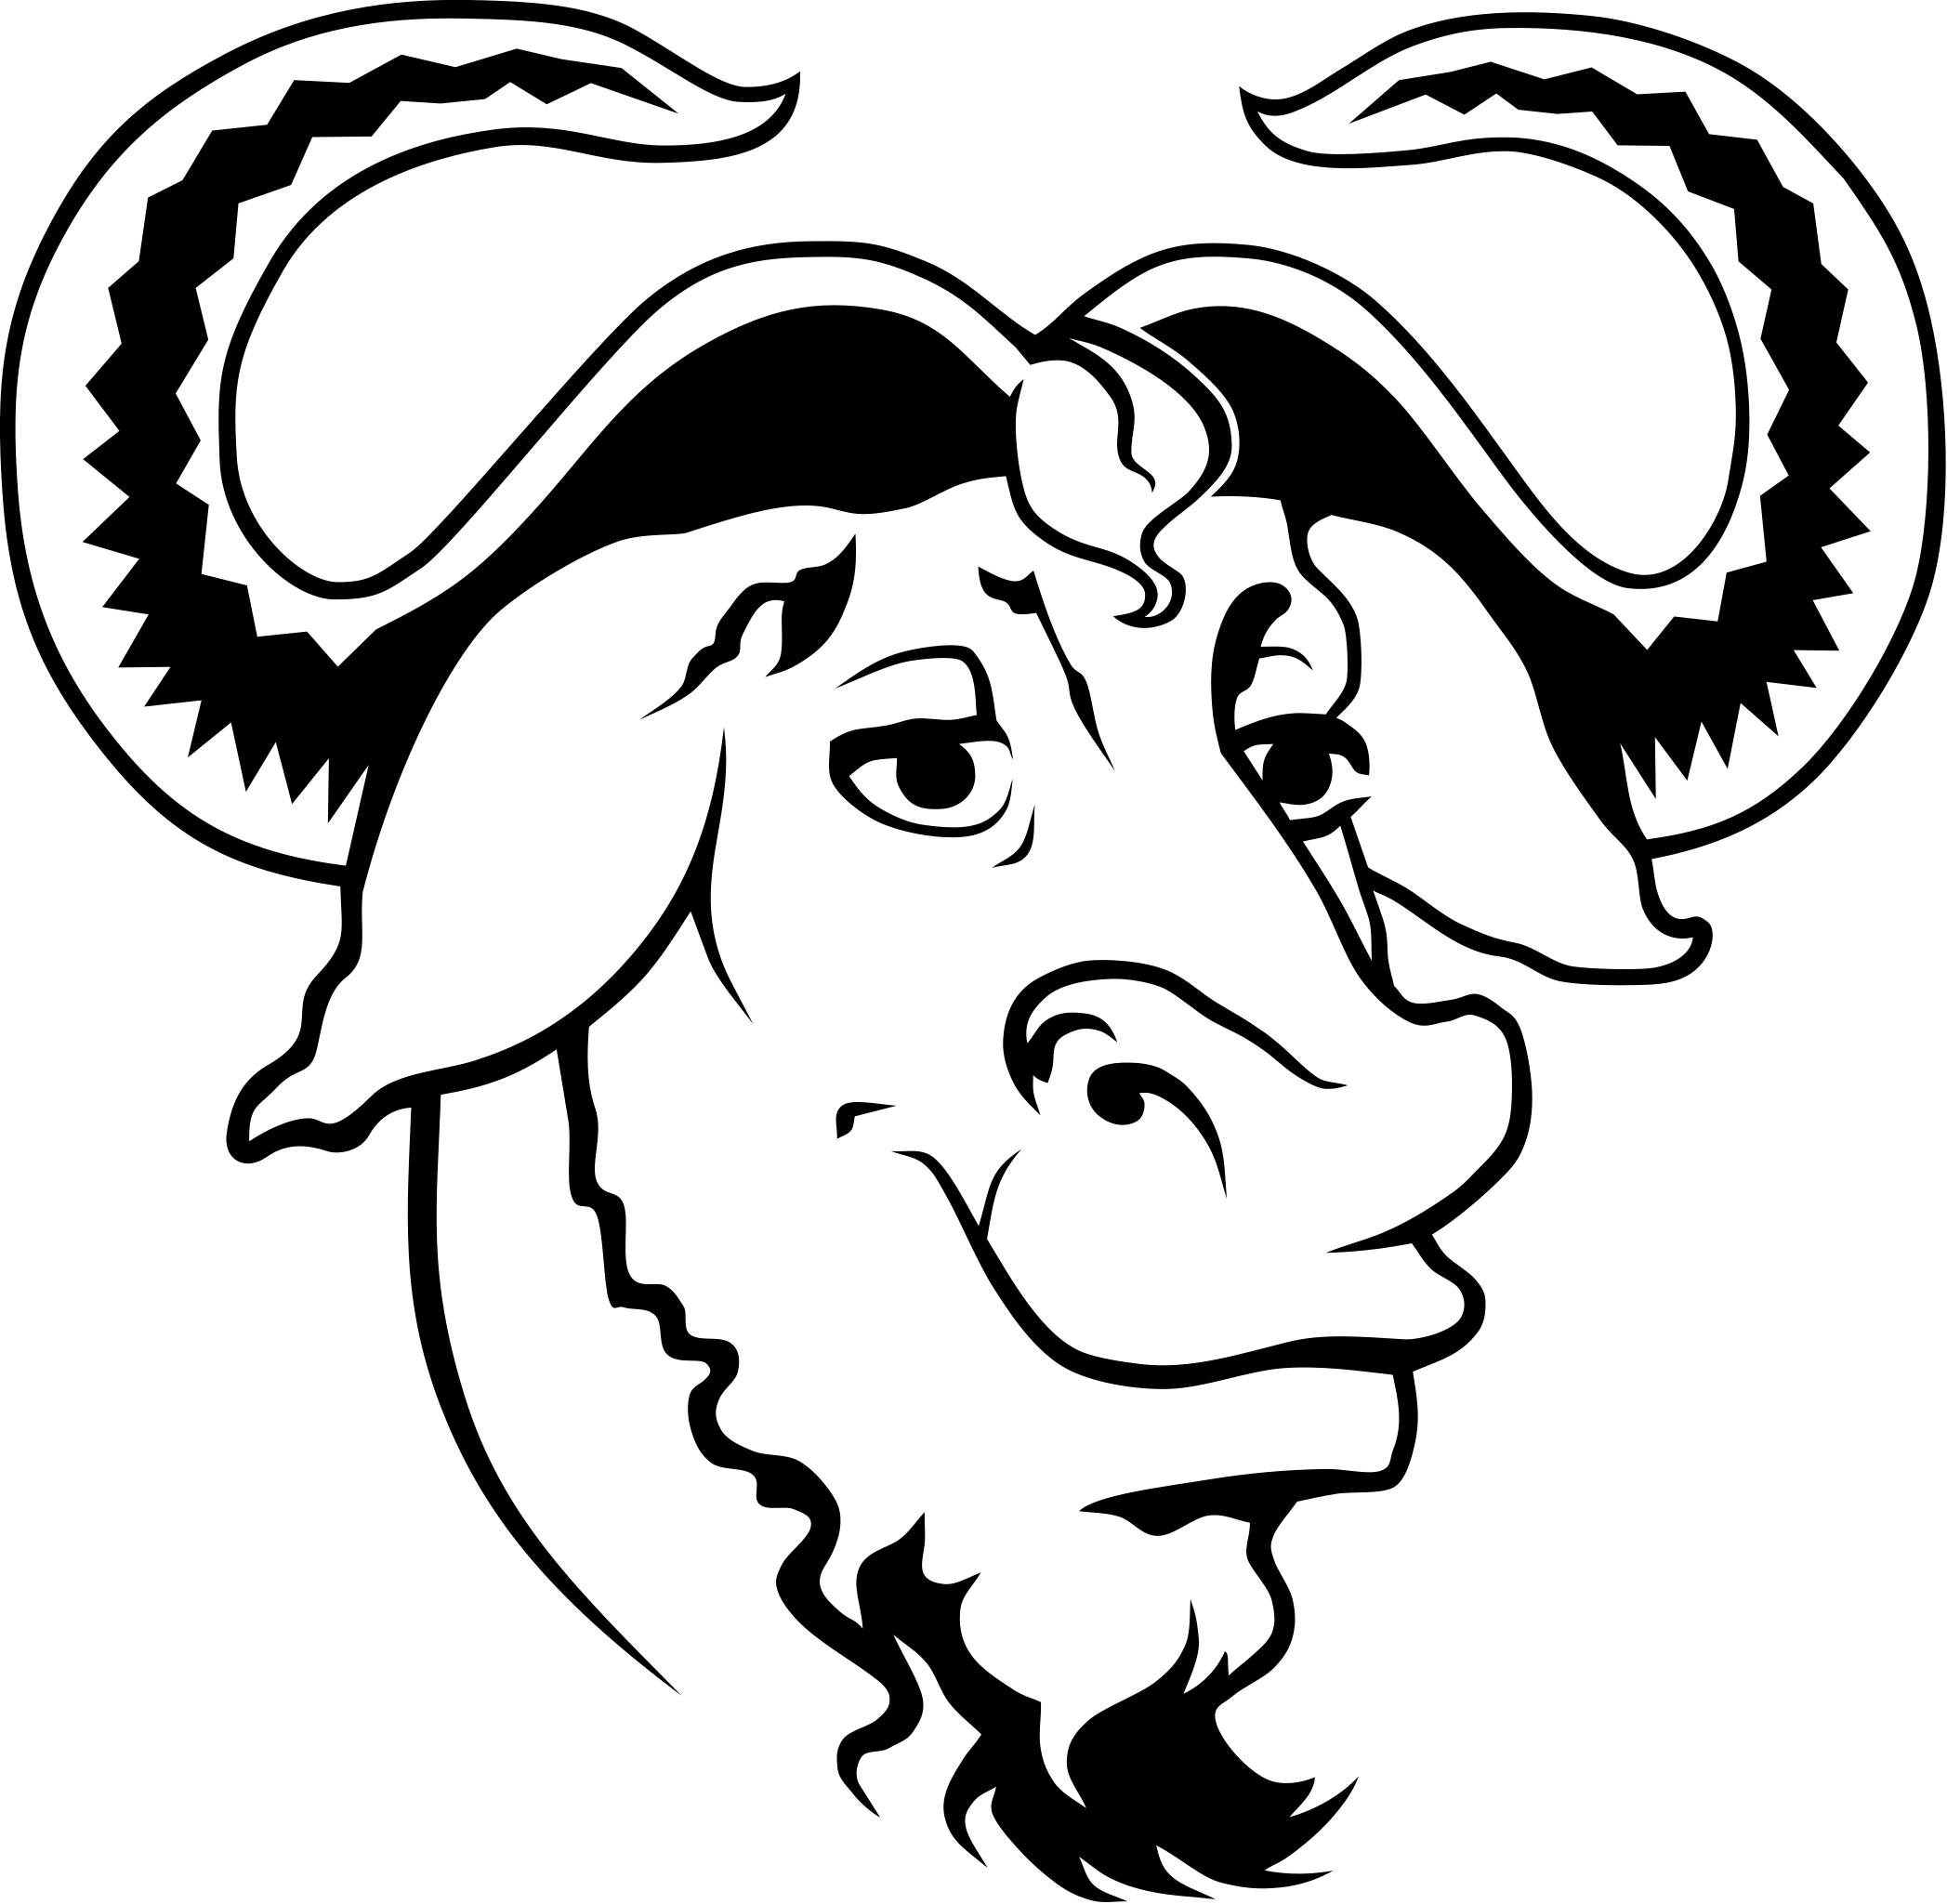 File:Heckert GNU white.svg - Wikimedia Commons